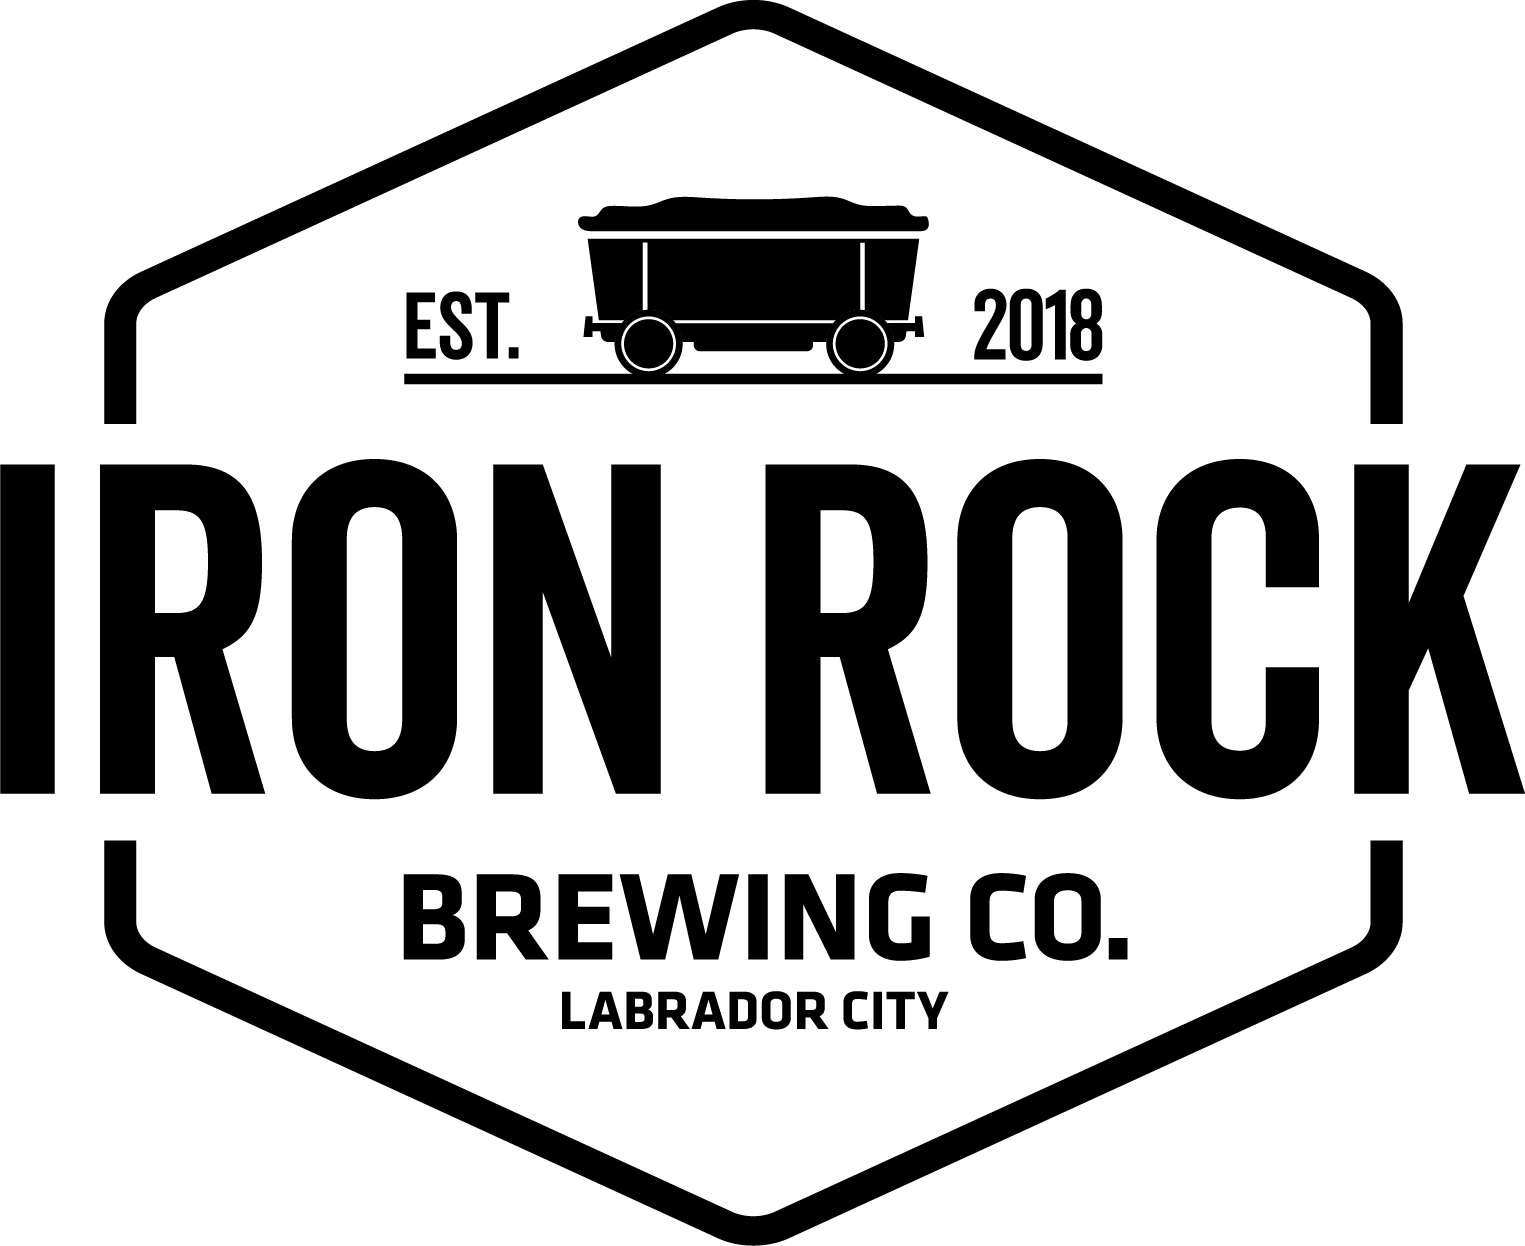 Iron Rock Brewing